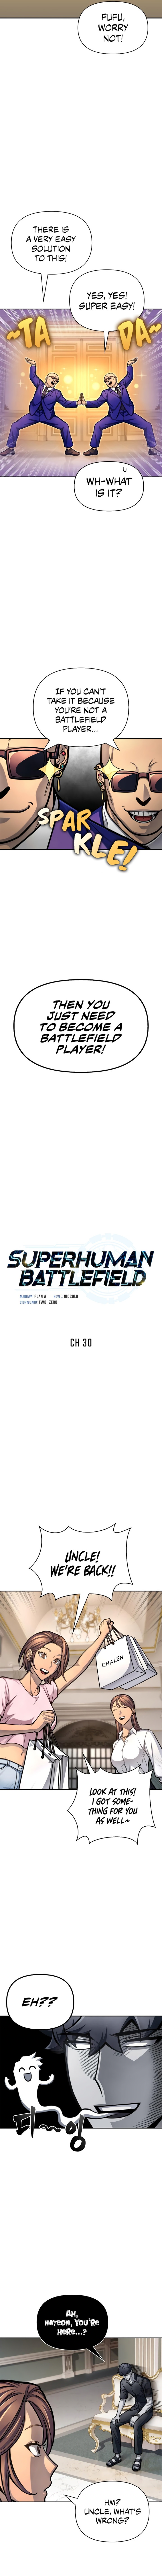 Superhuman Battlefield - Chapter 30 Page 2